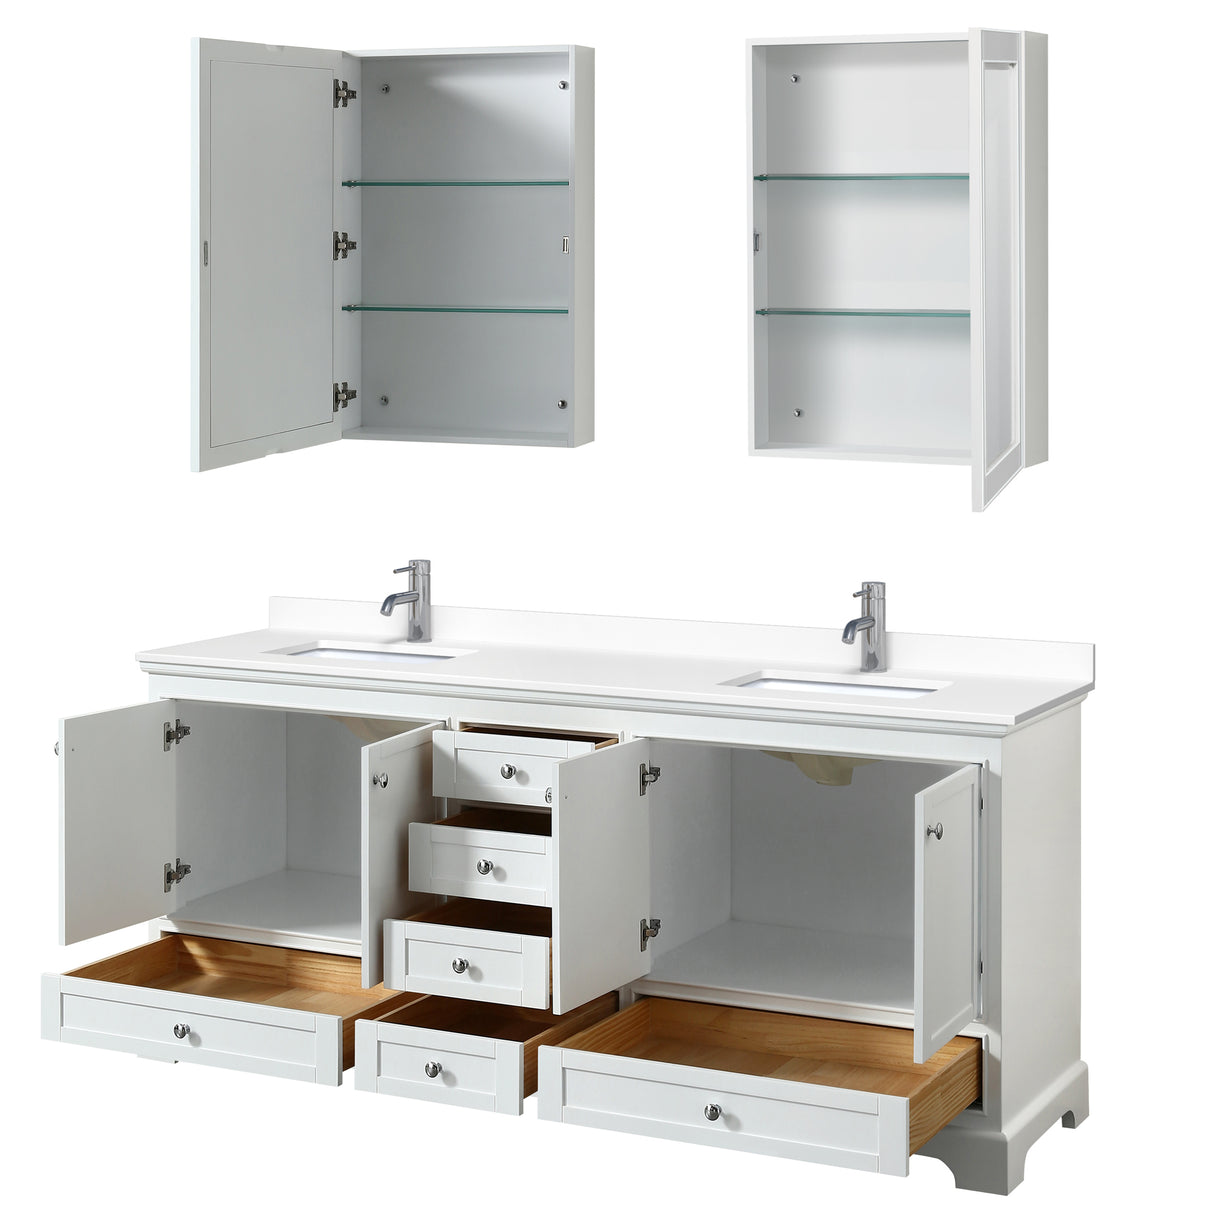 Deborah 80 Inch Double Bathroom Vanity in White White Cultured Marble Countertop Undermount Square Sinks Medicine Cabinets